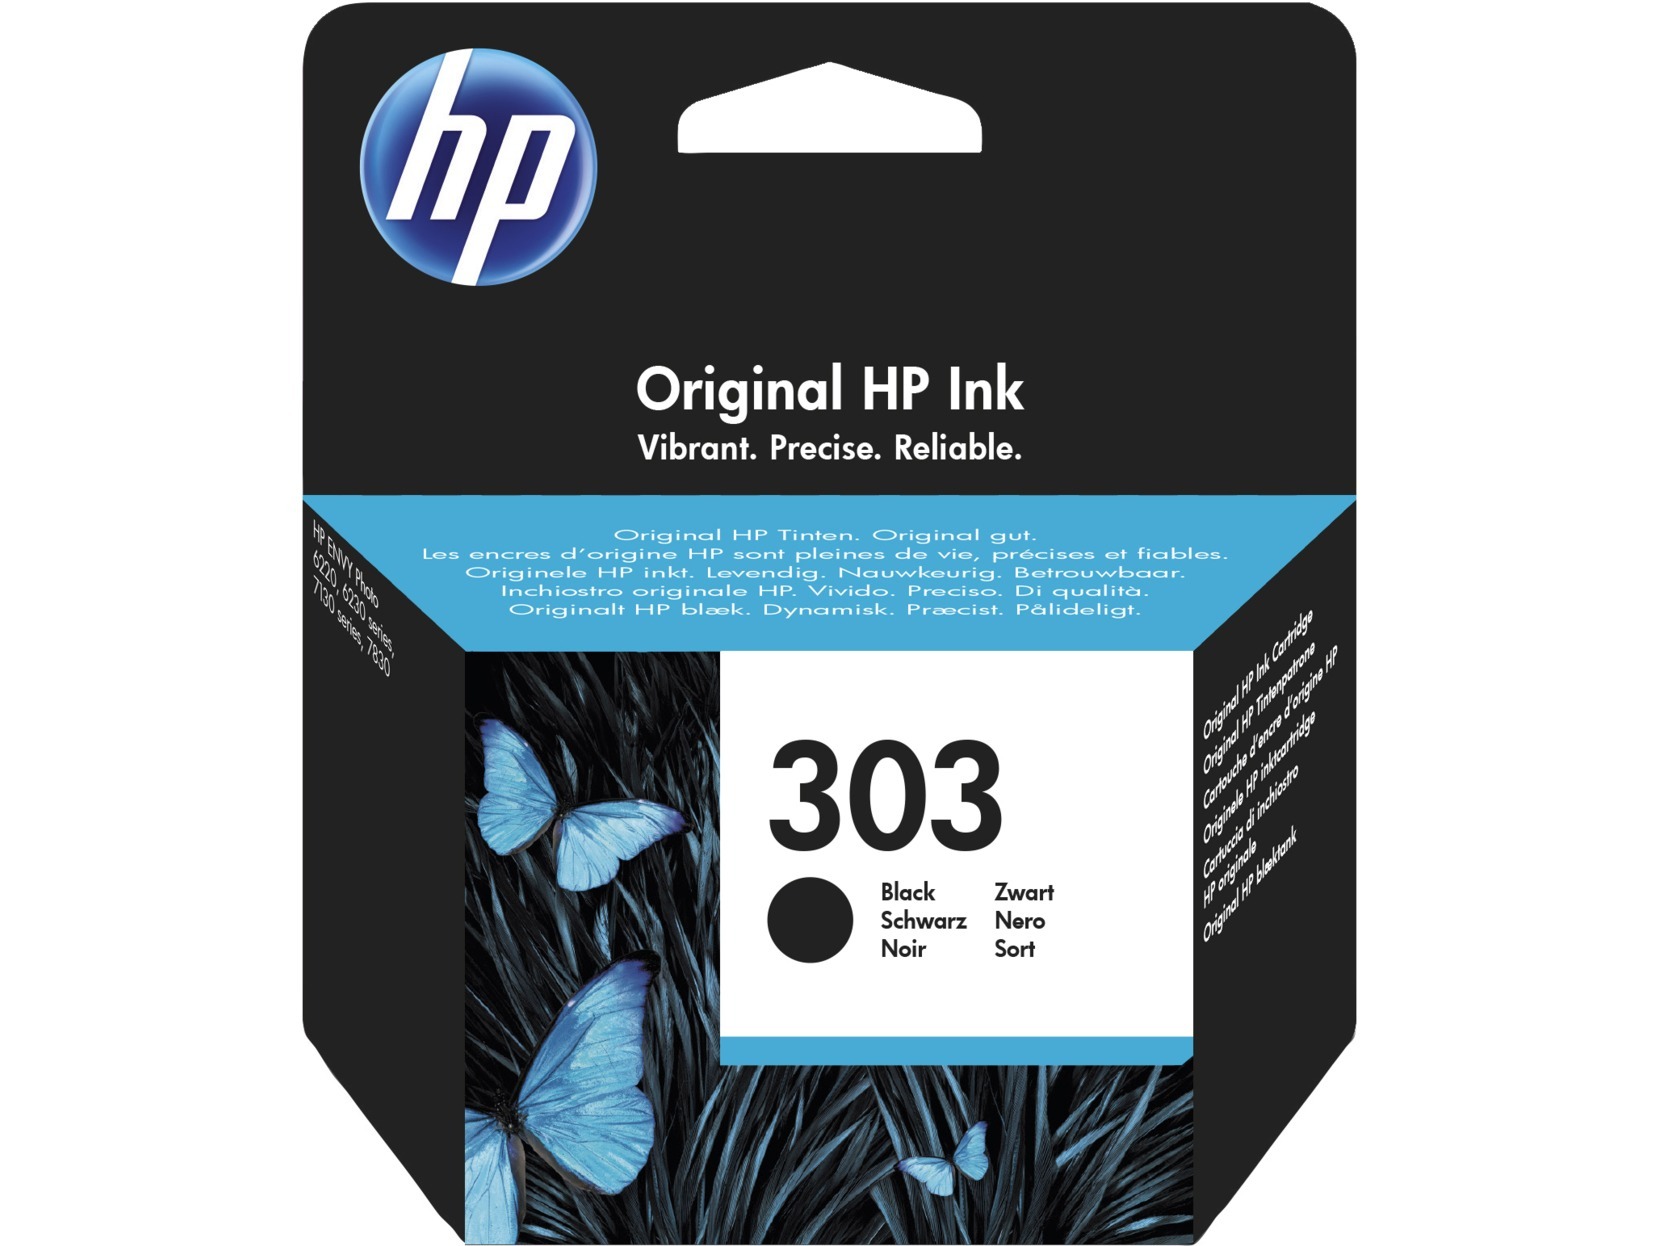 HP 303 Inkt Zwart